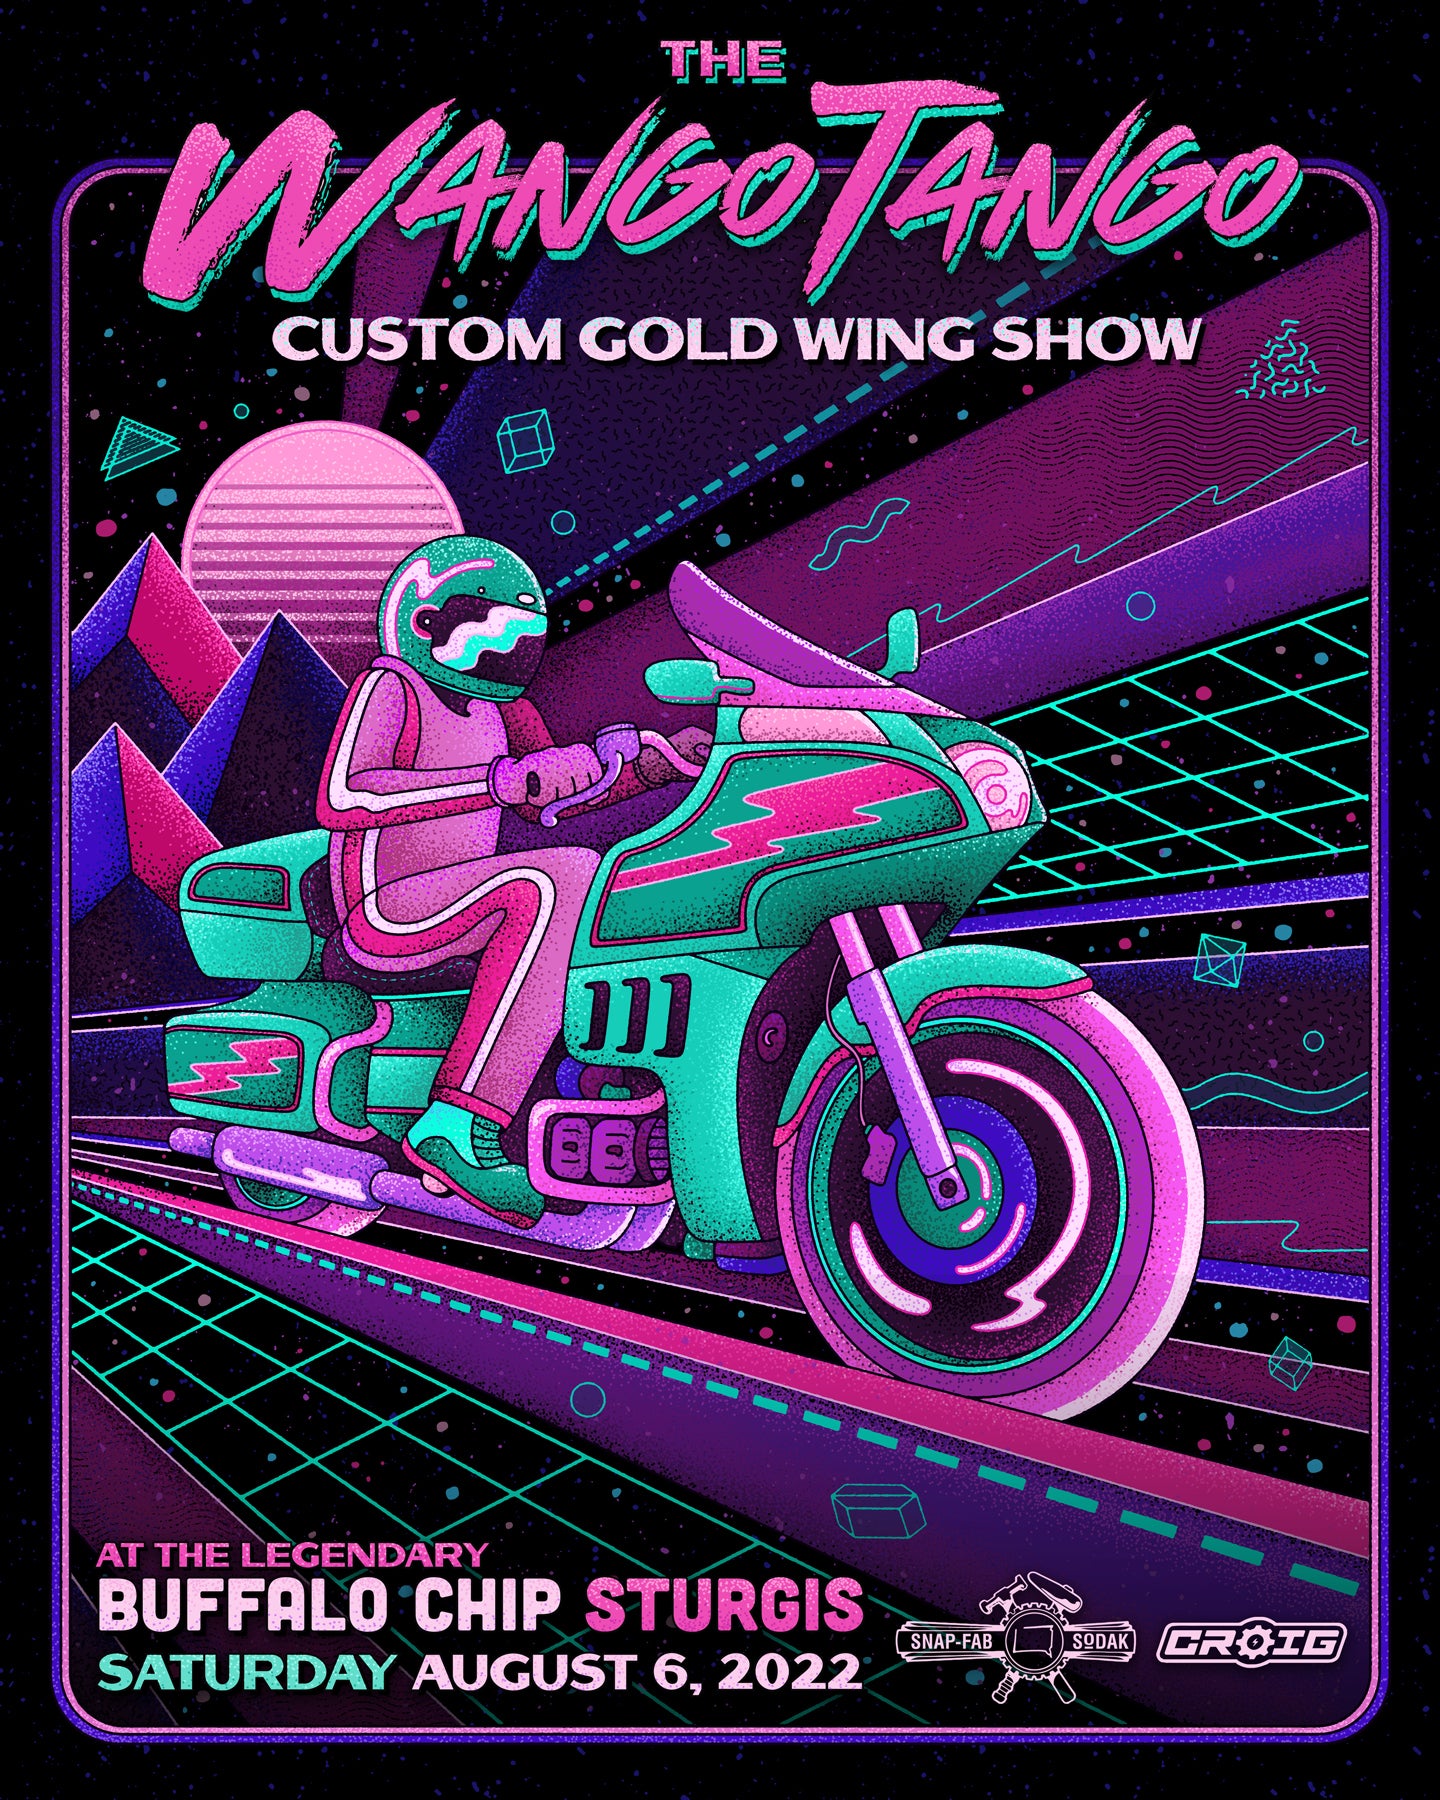 Kurt Diserio Pittsburgh poster illustration designer Wango Tango custom gold wing motorcycle show event